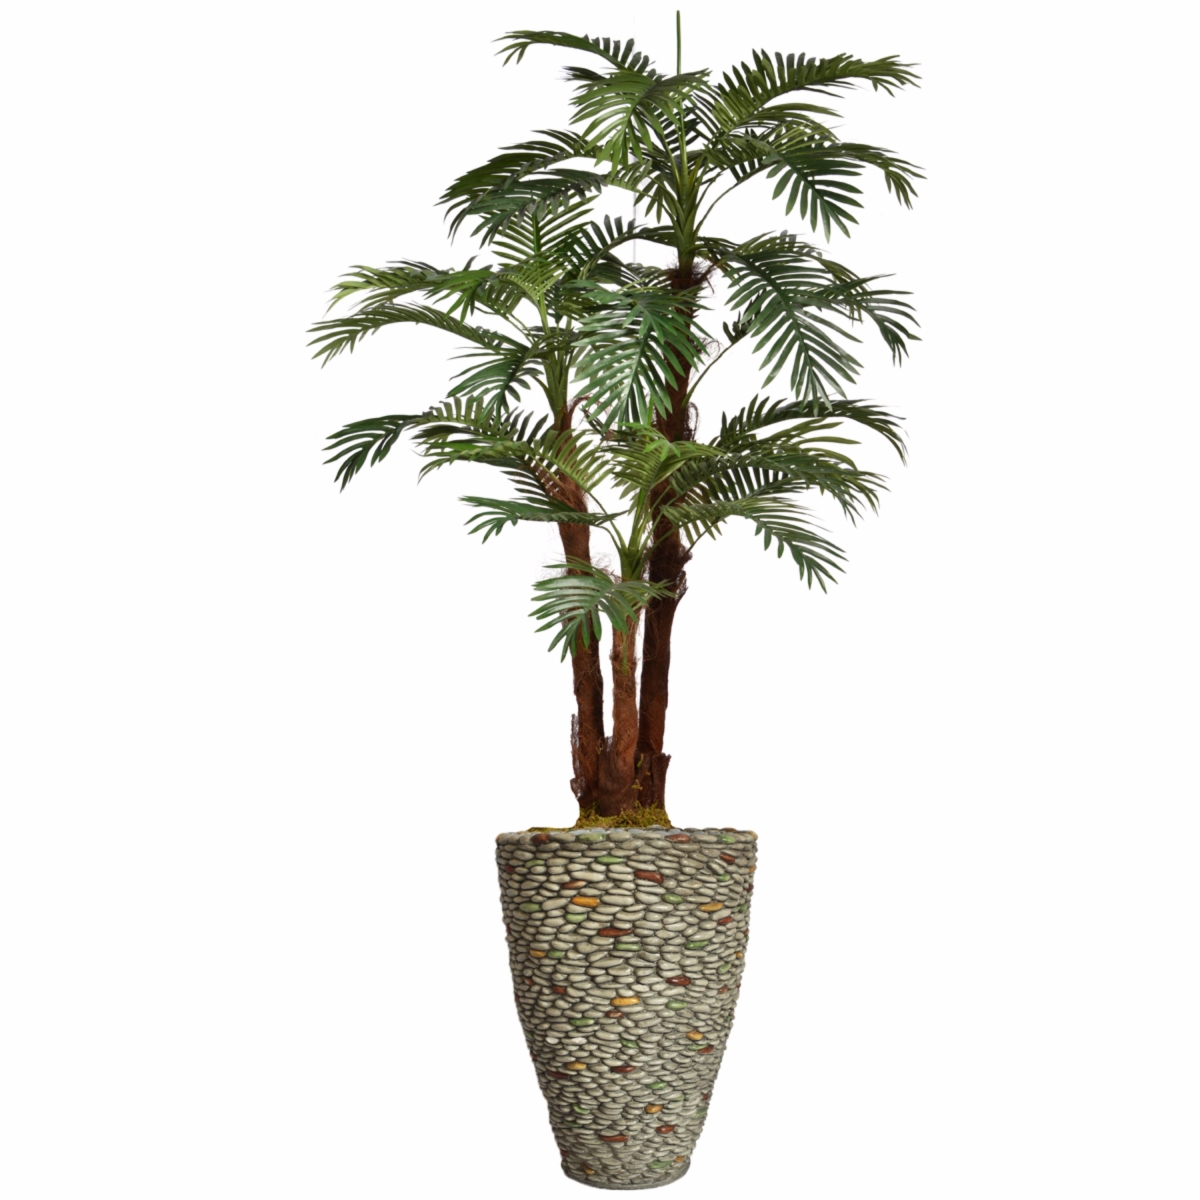 Vhx135209 79.5 In. Tall Palm Tree With Burlap Kit & Fiberstone Planter